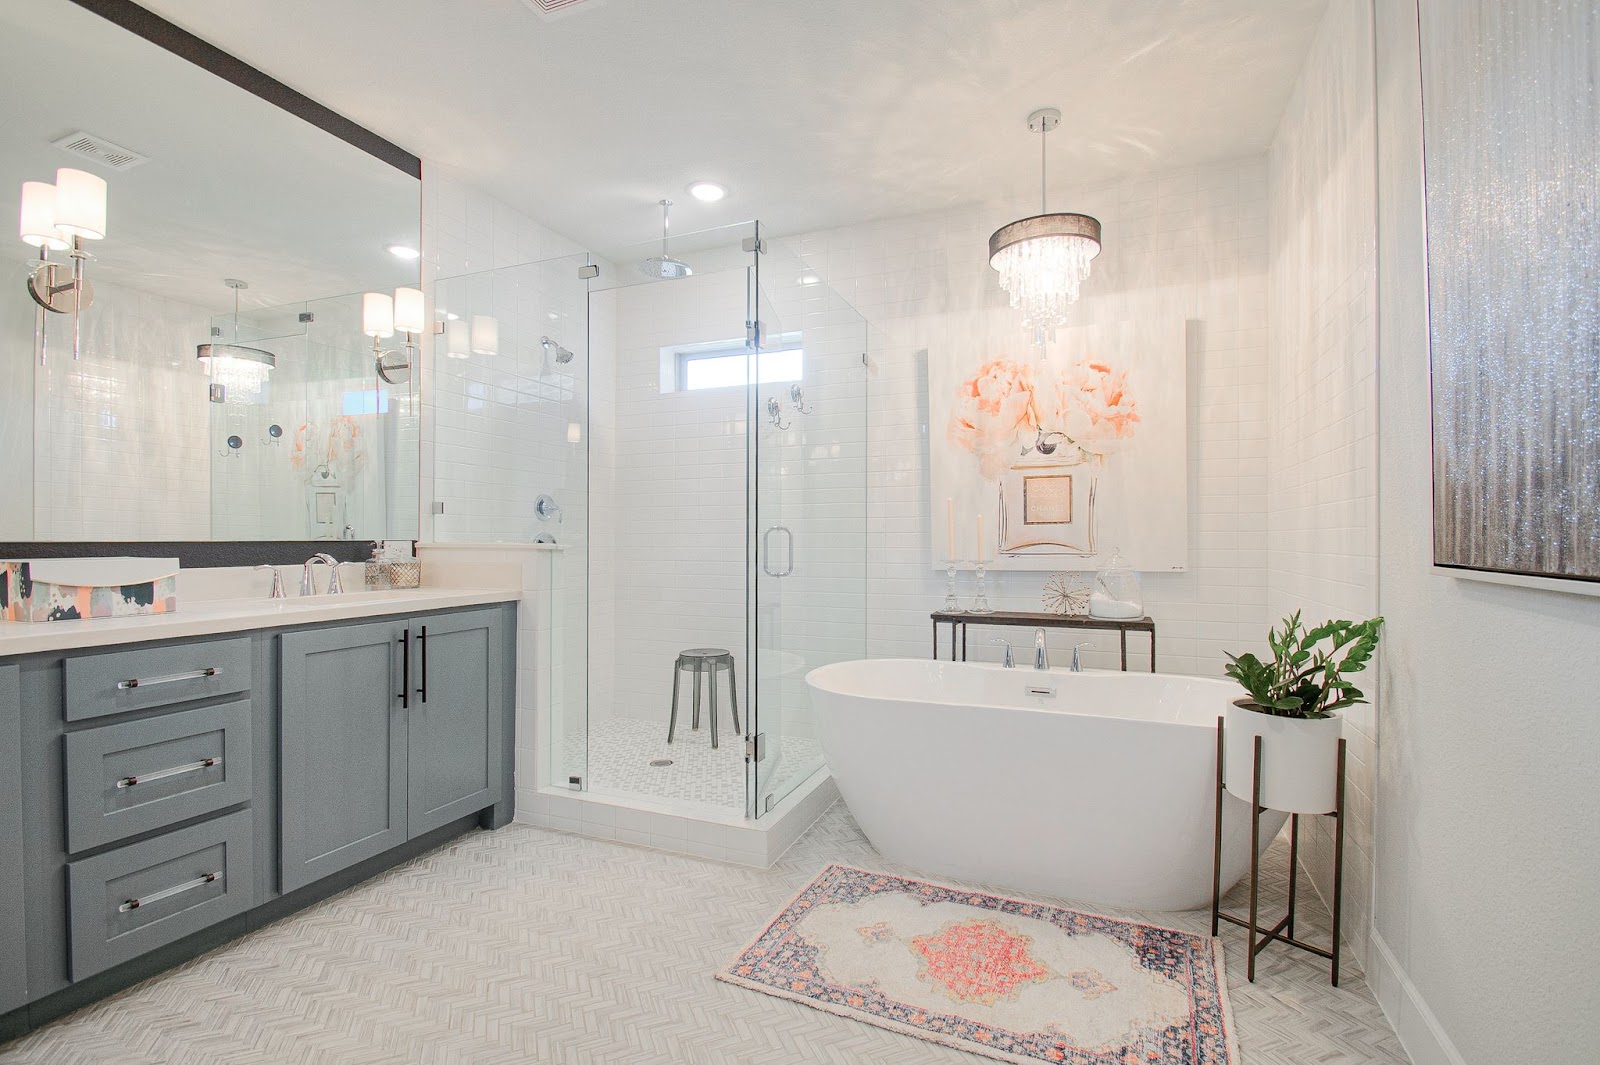 Designs-By-Keti-Highland-Park-Texas-Bathroom-Cabinet-Design-Gray-Cabinets-Large-Tub